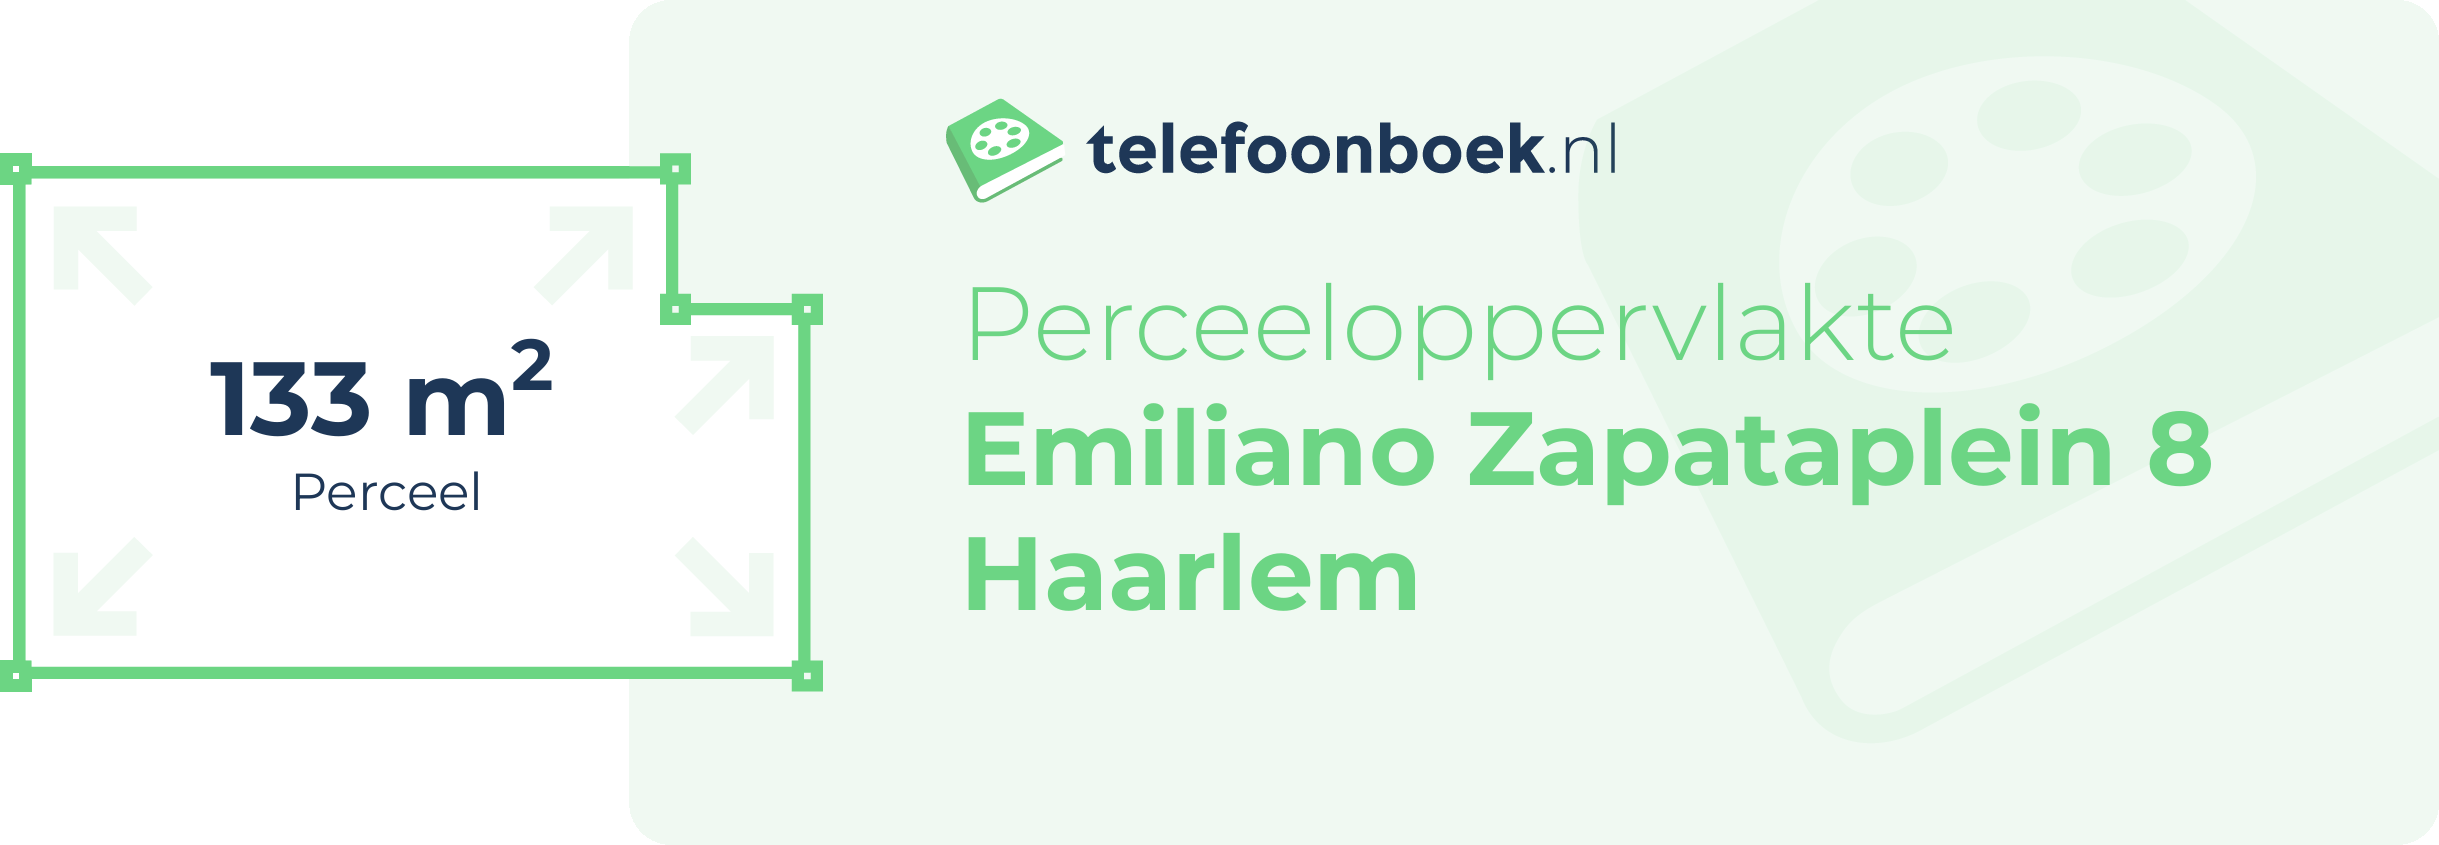 Perceeloppervlakte Emiliano Zapataplein 8 Haarlem